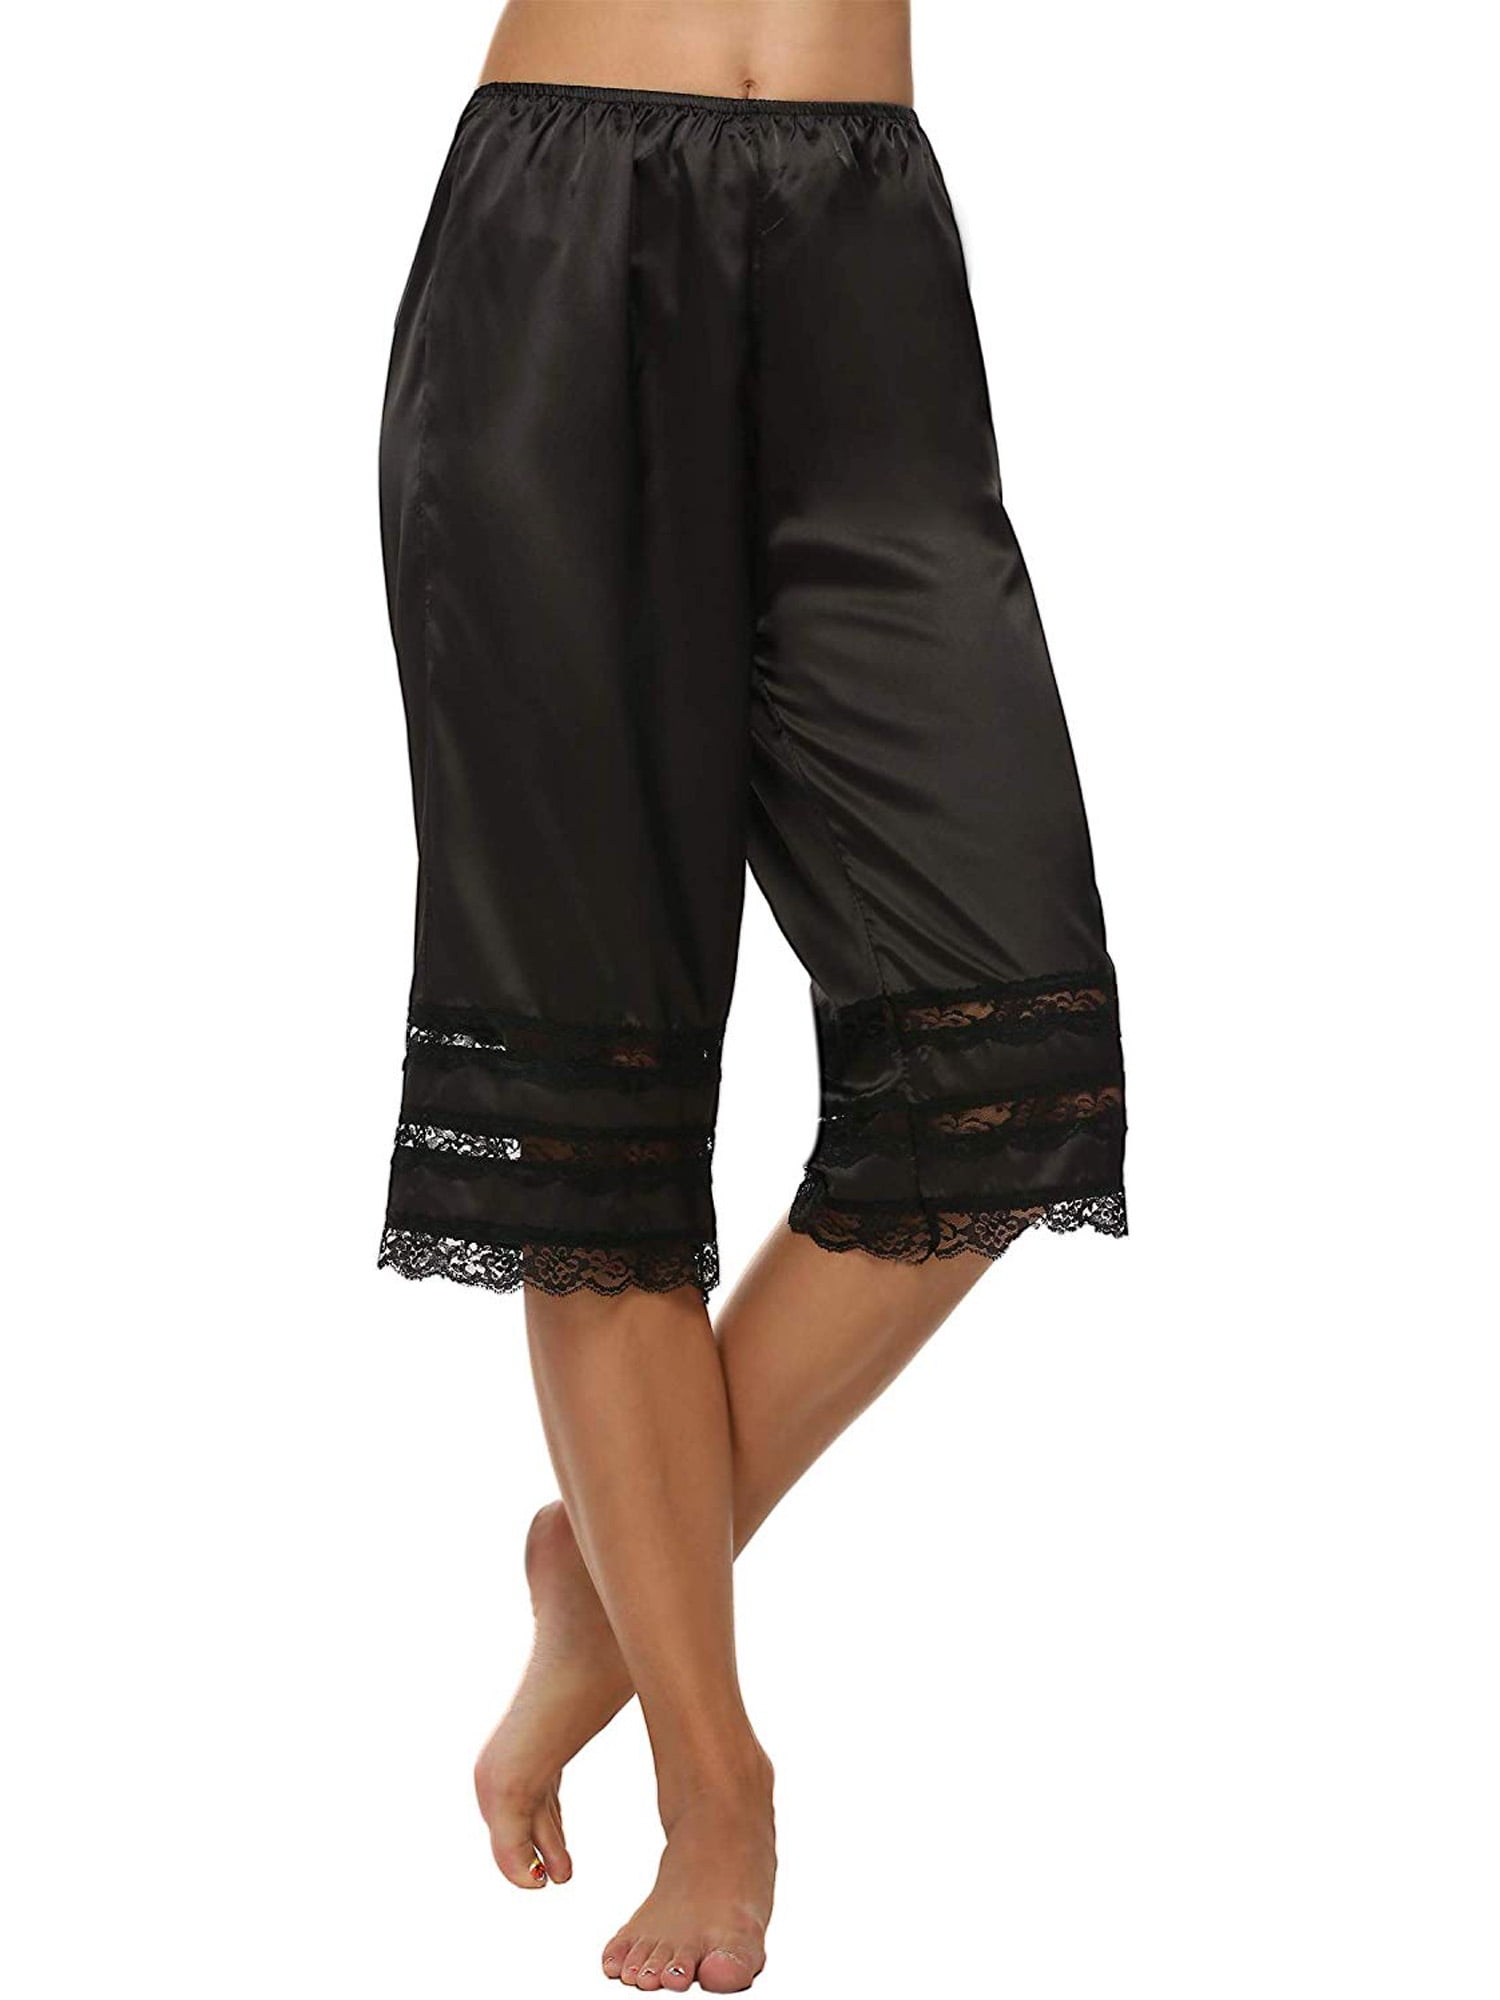 JBEELATE Pettipants Nylon Culotte Slip Bloomers Split Skirt